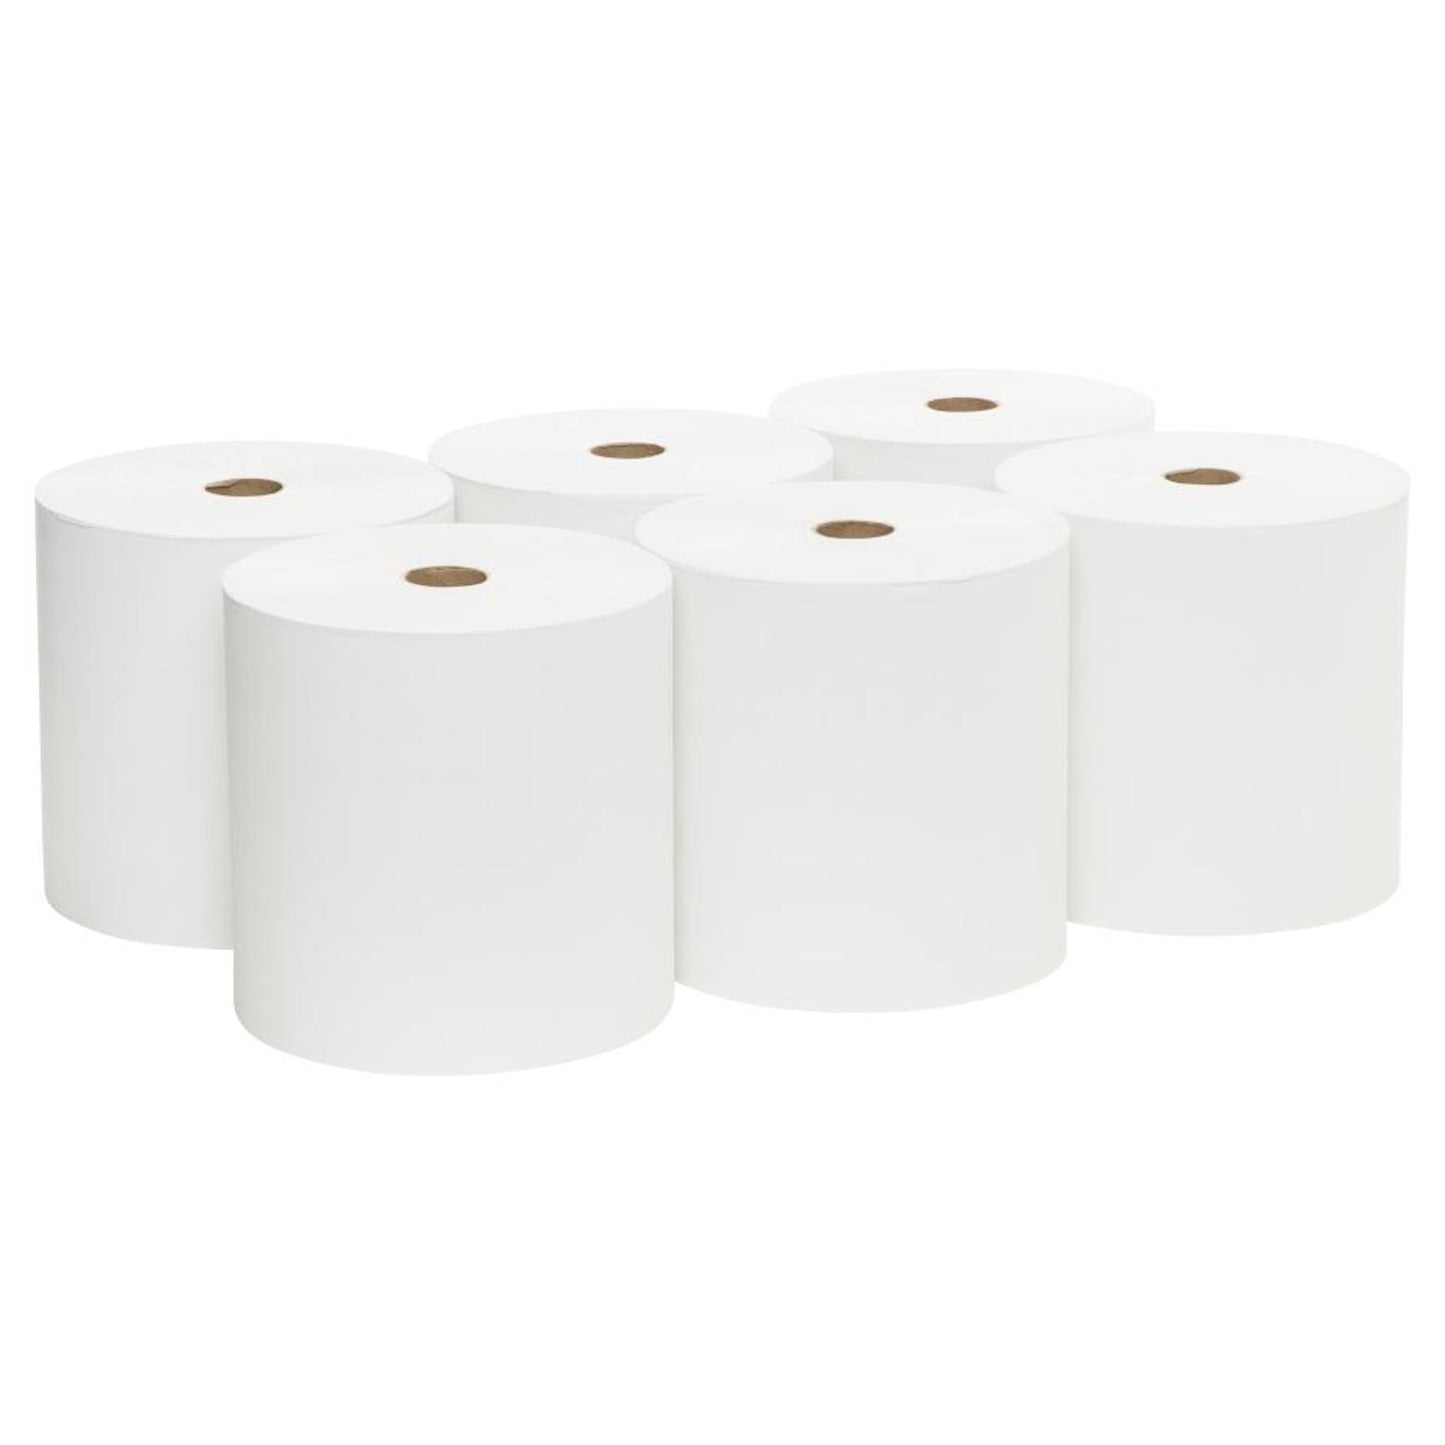 Scott 1005 Hard Roll Towel 305m White - Carton (6 x 305m Roll)